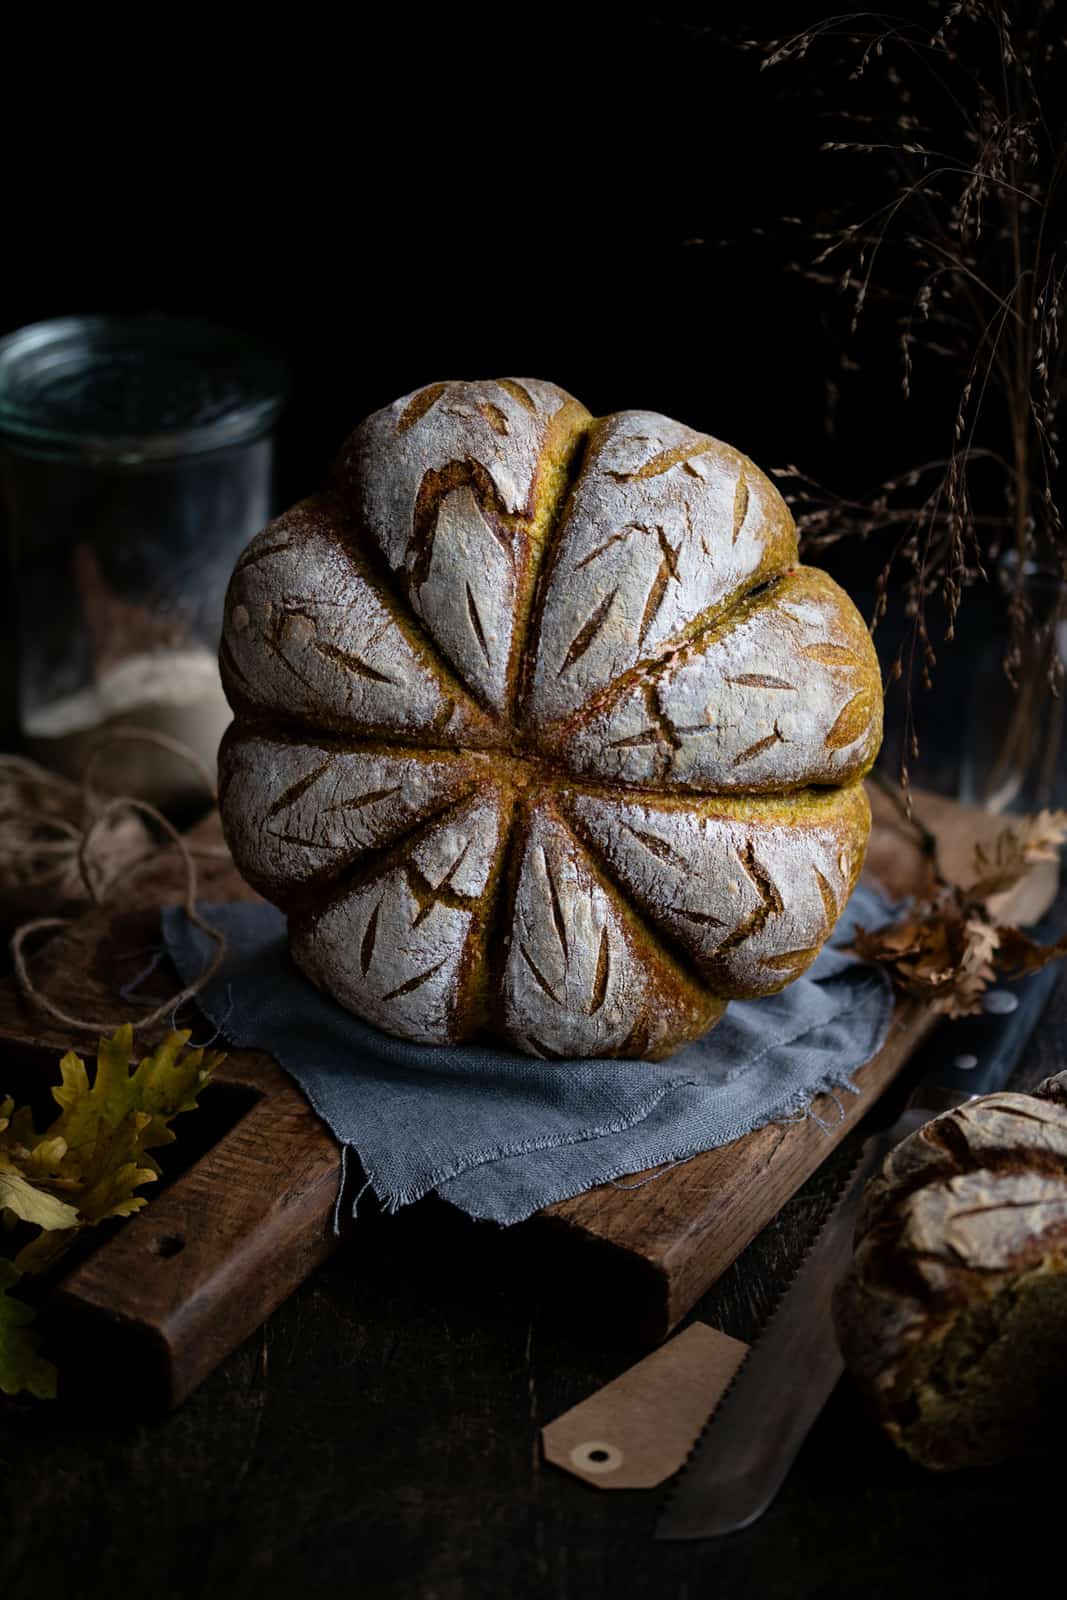 pumpkin shaped sourdough bread against a dark background